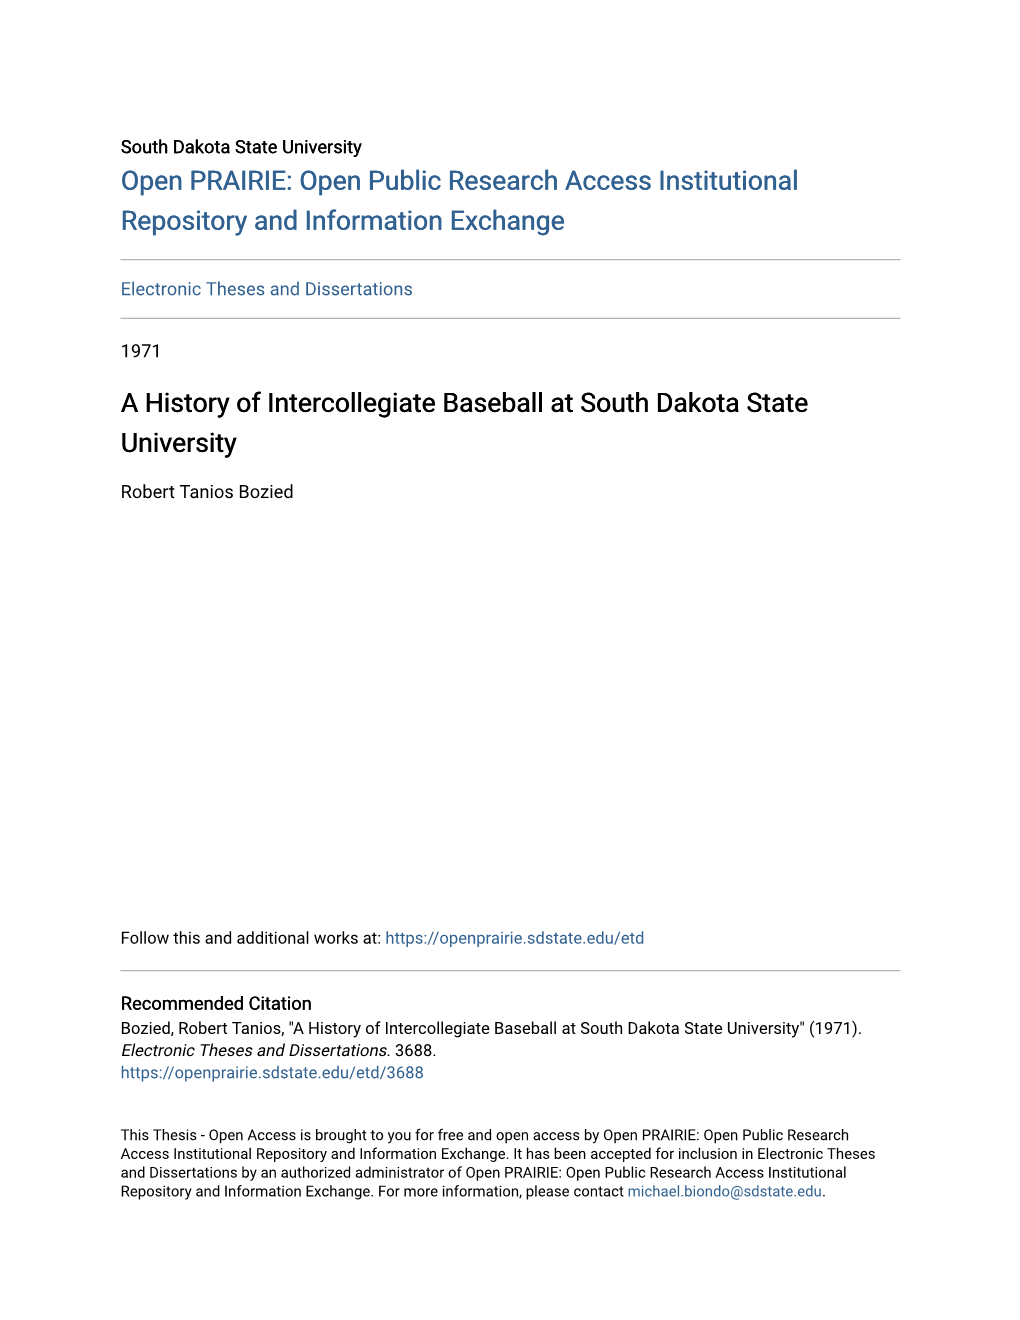 A History of Intercollegiate Baseball at South Dakota State University